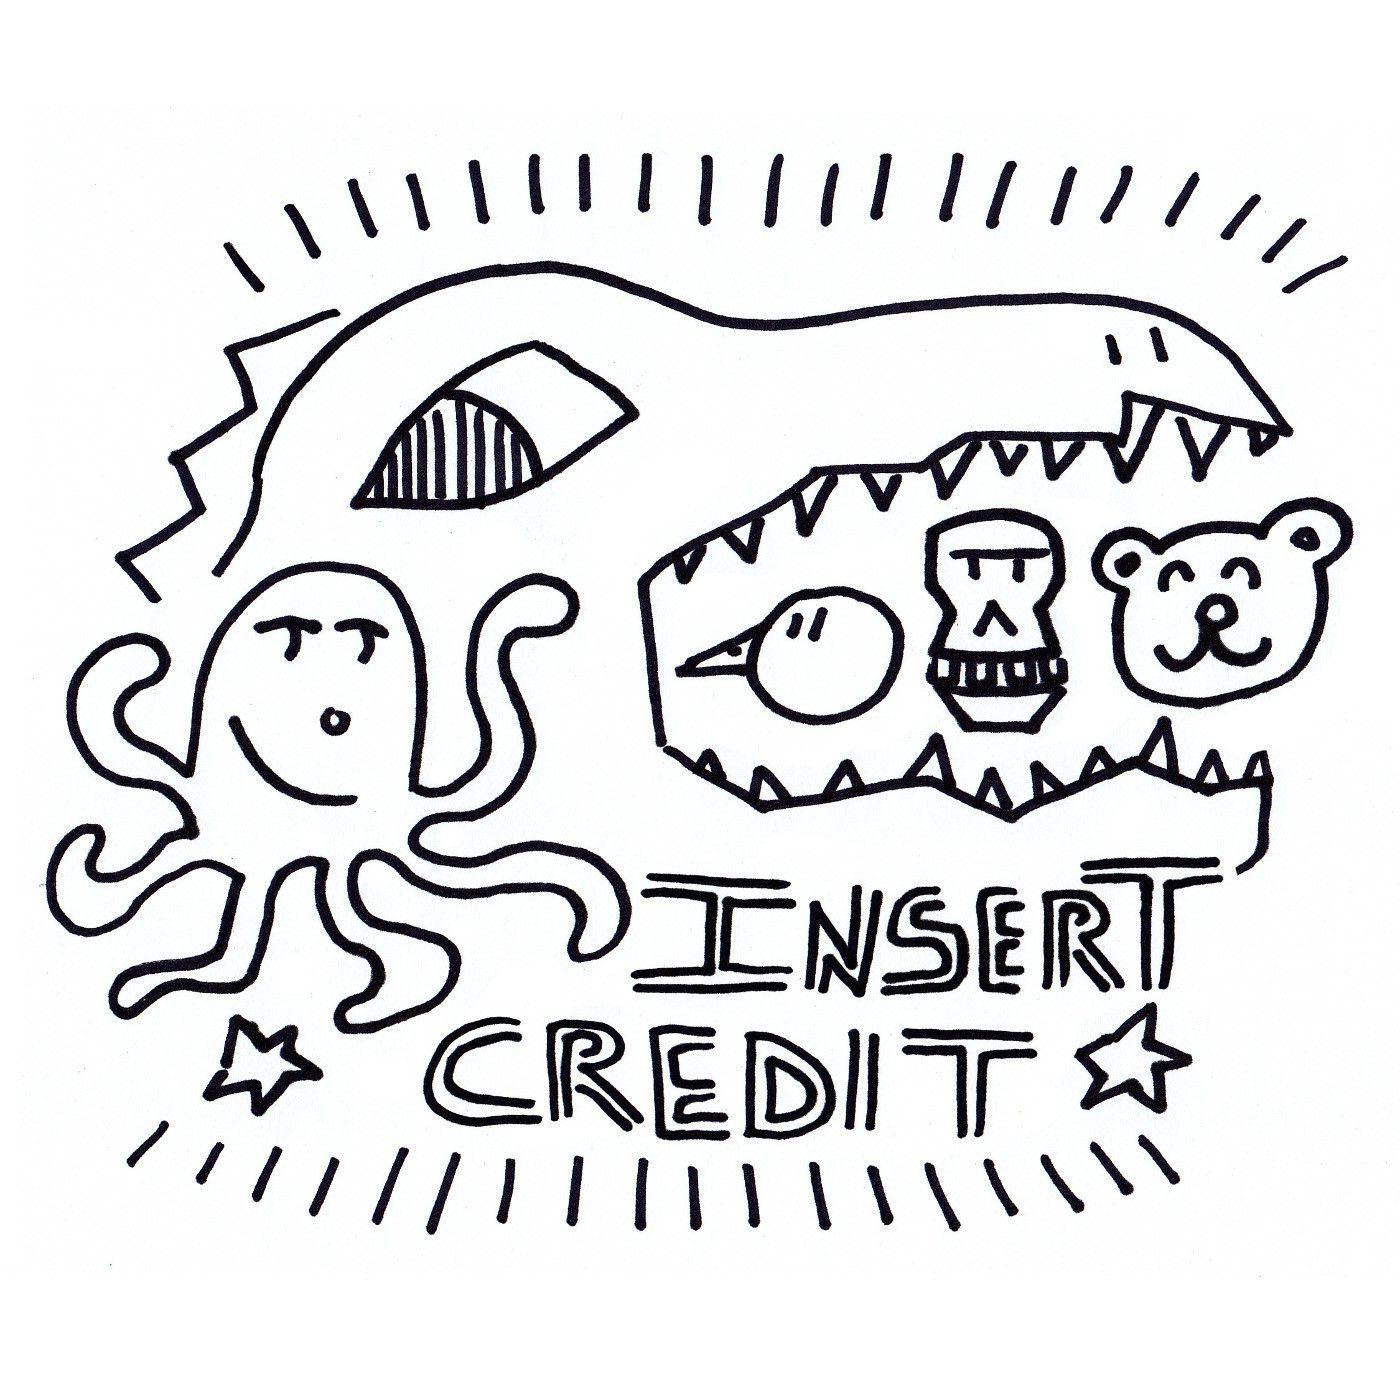 The Insert Credit Show:insert credit